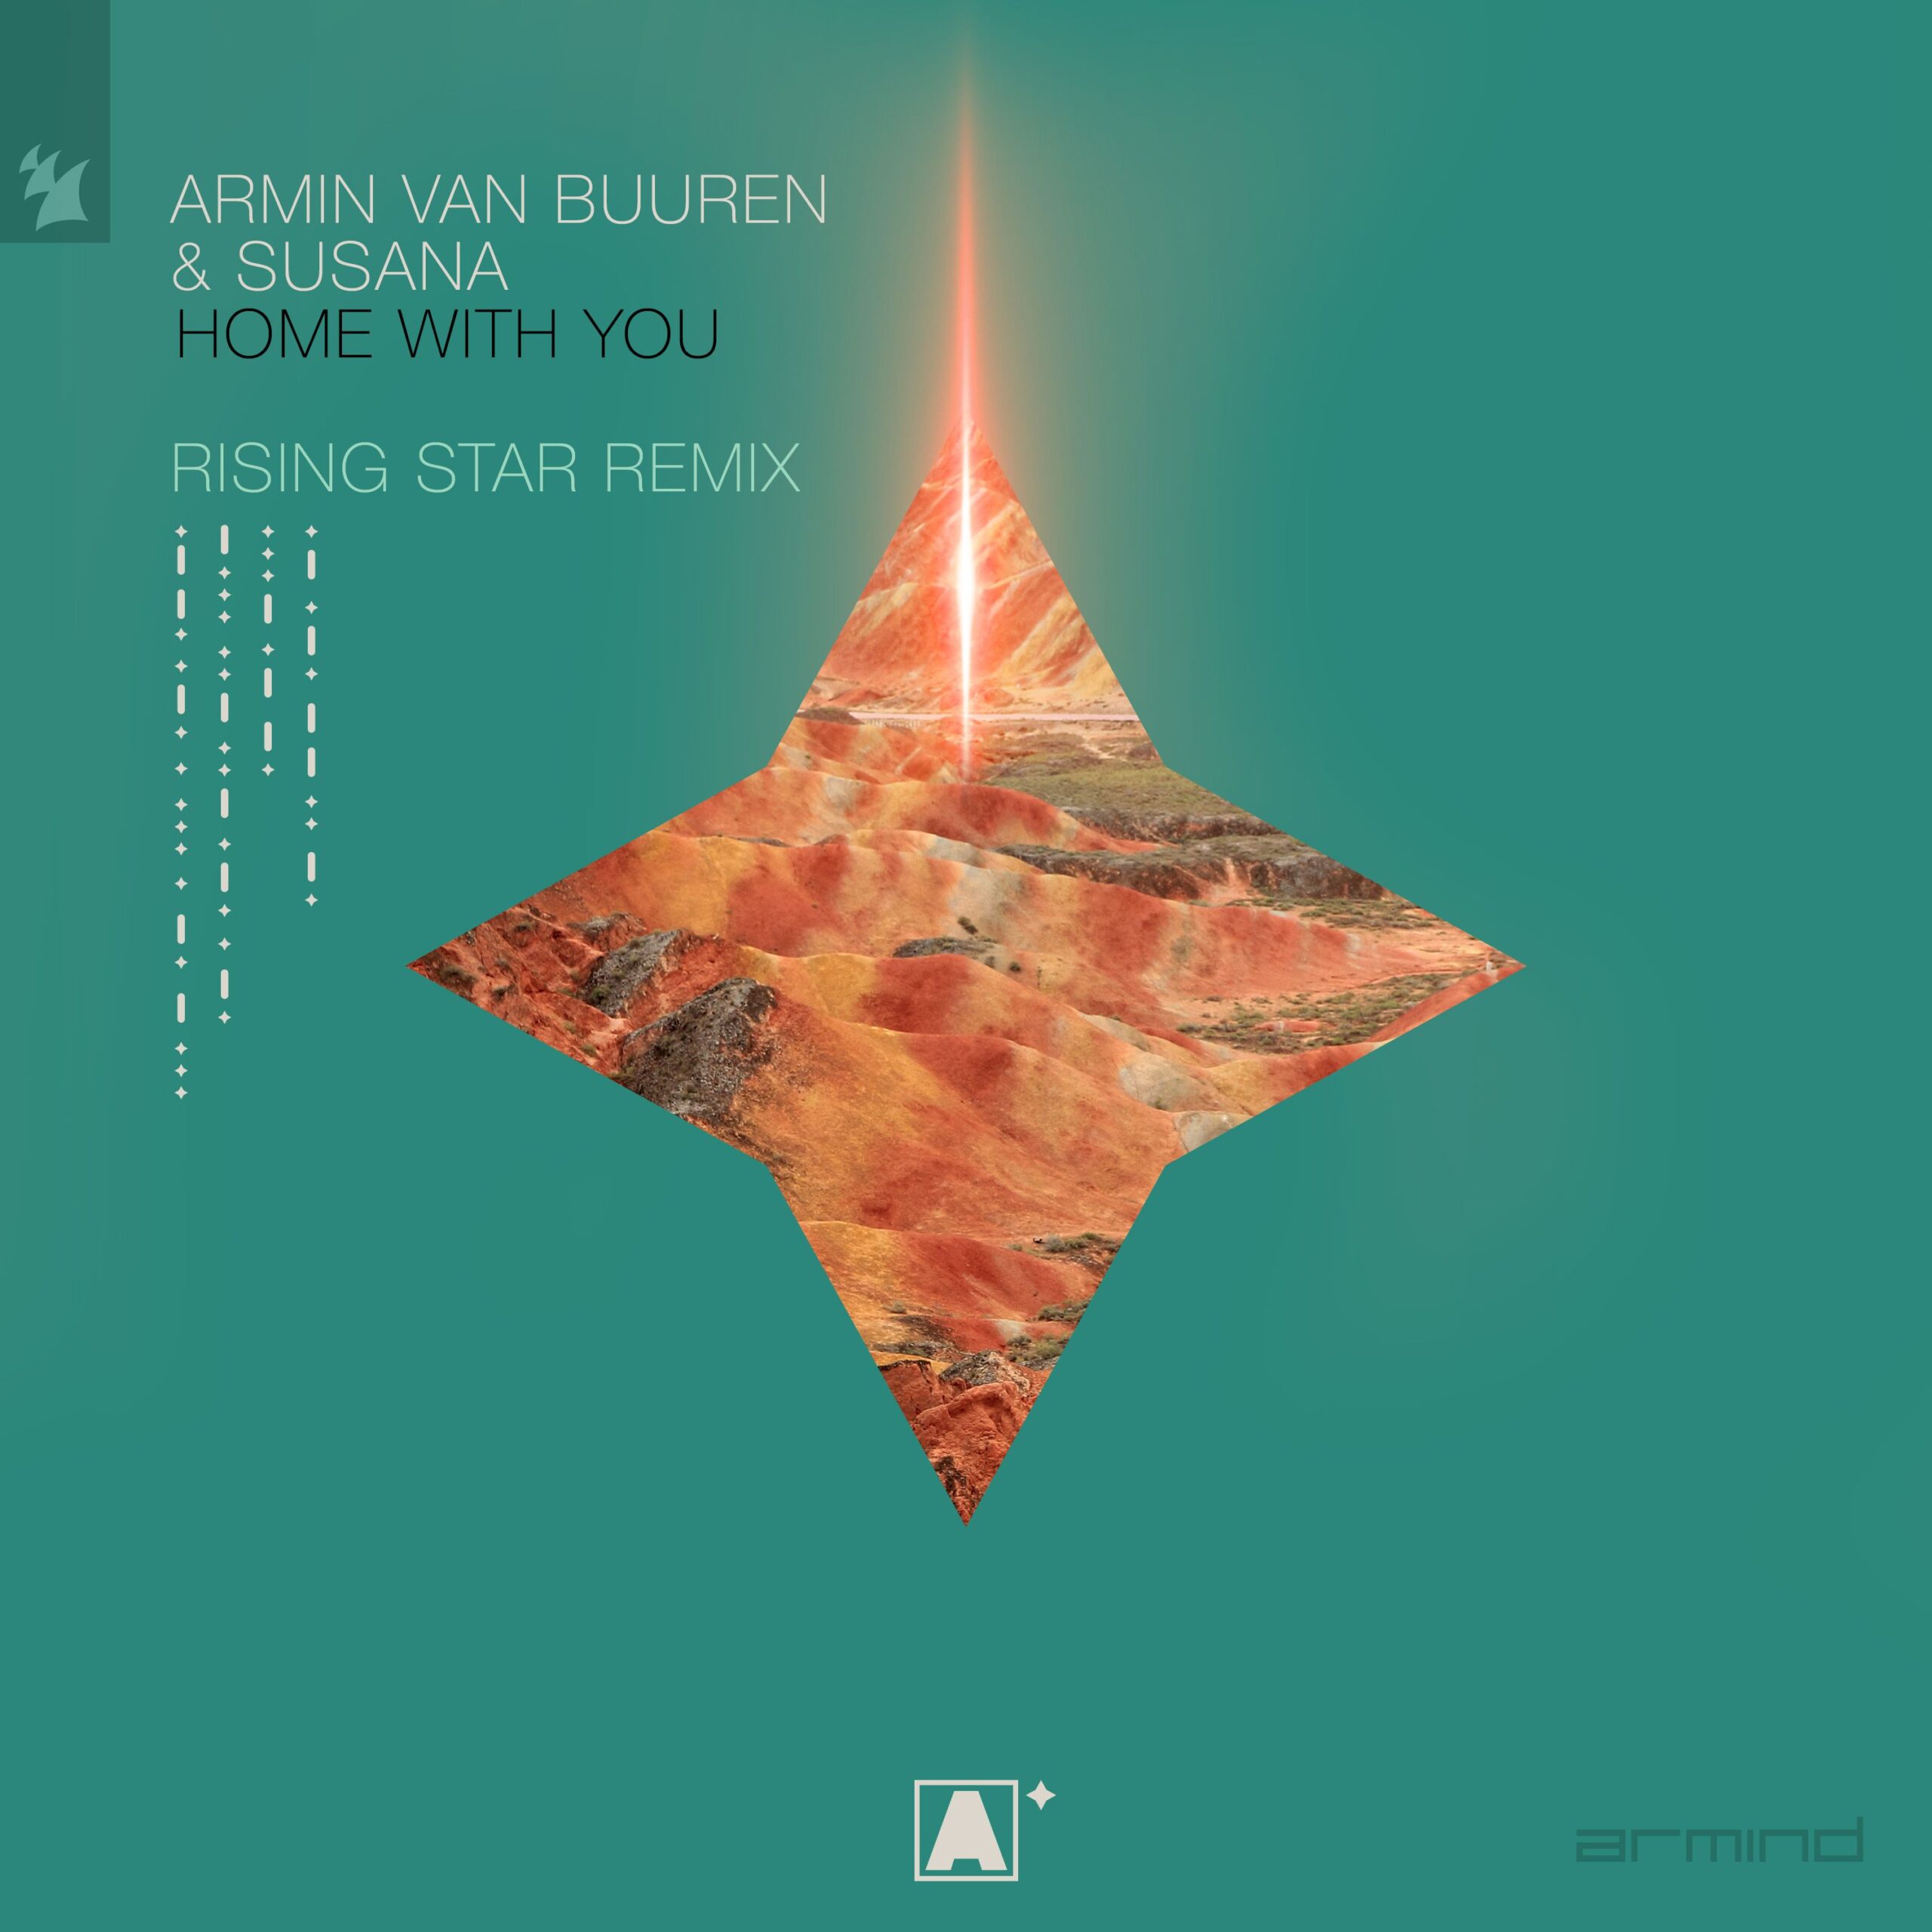 Armin van Buuren and Susana presents Home With You (Armin van Buuren pres. Rising Star Remix) on Armada Music